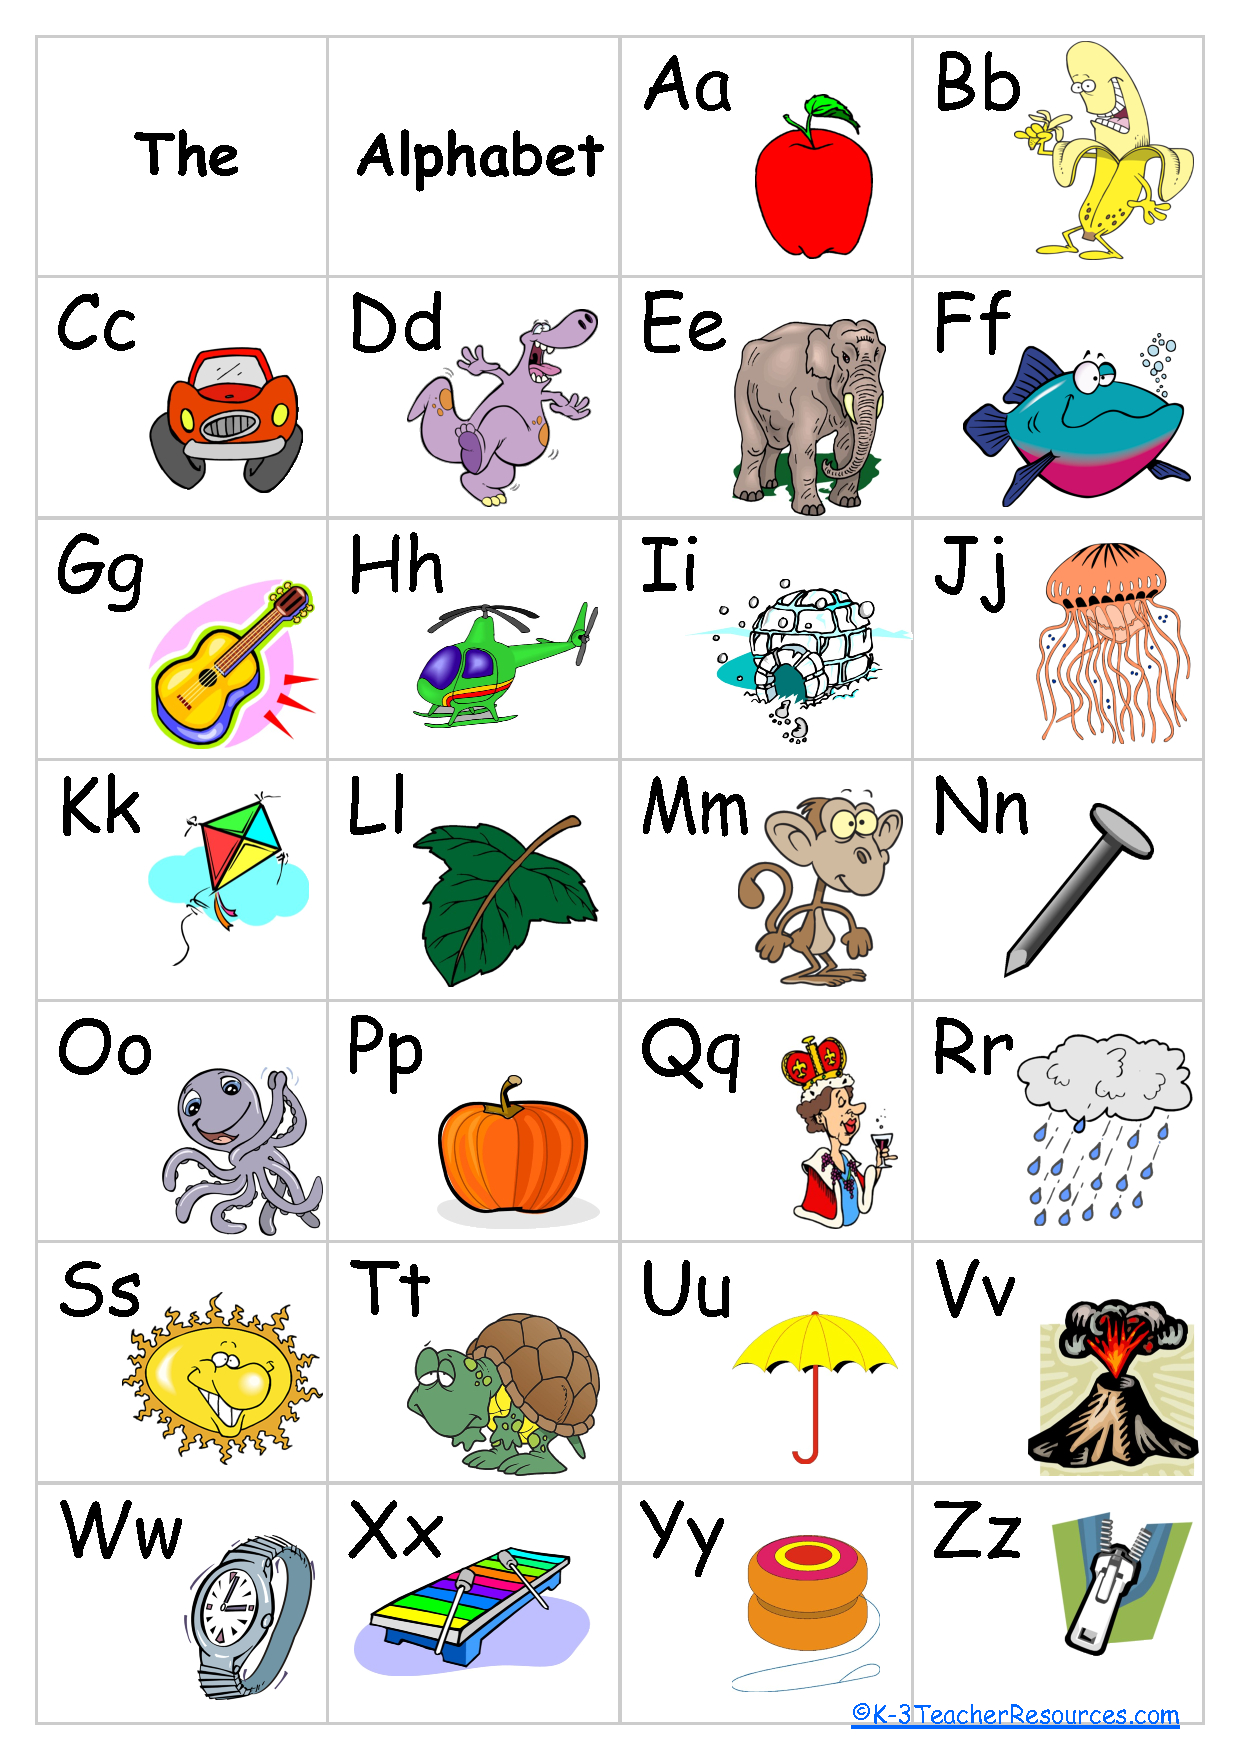 Free+Printable+Alphabet+Chart | Schoolroom Ideas | Alphabet Charts - Free Printable Alphabet Chart